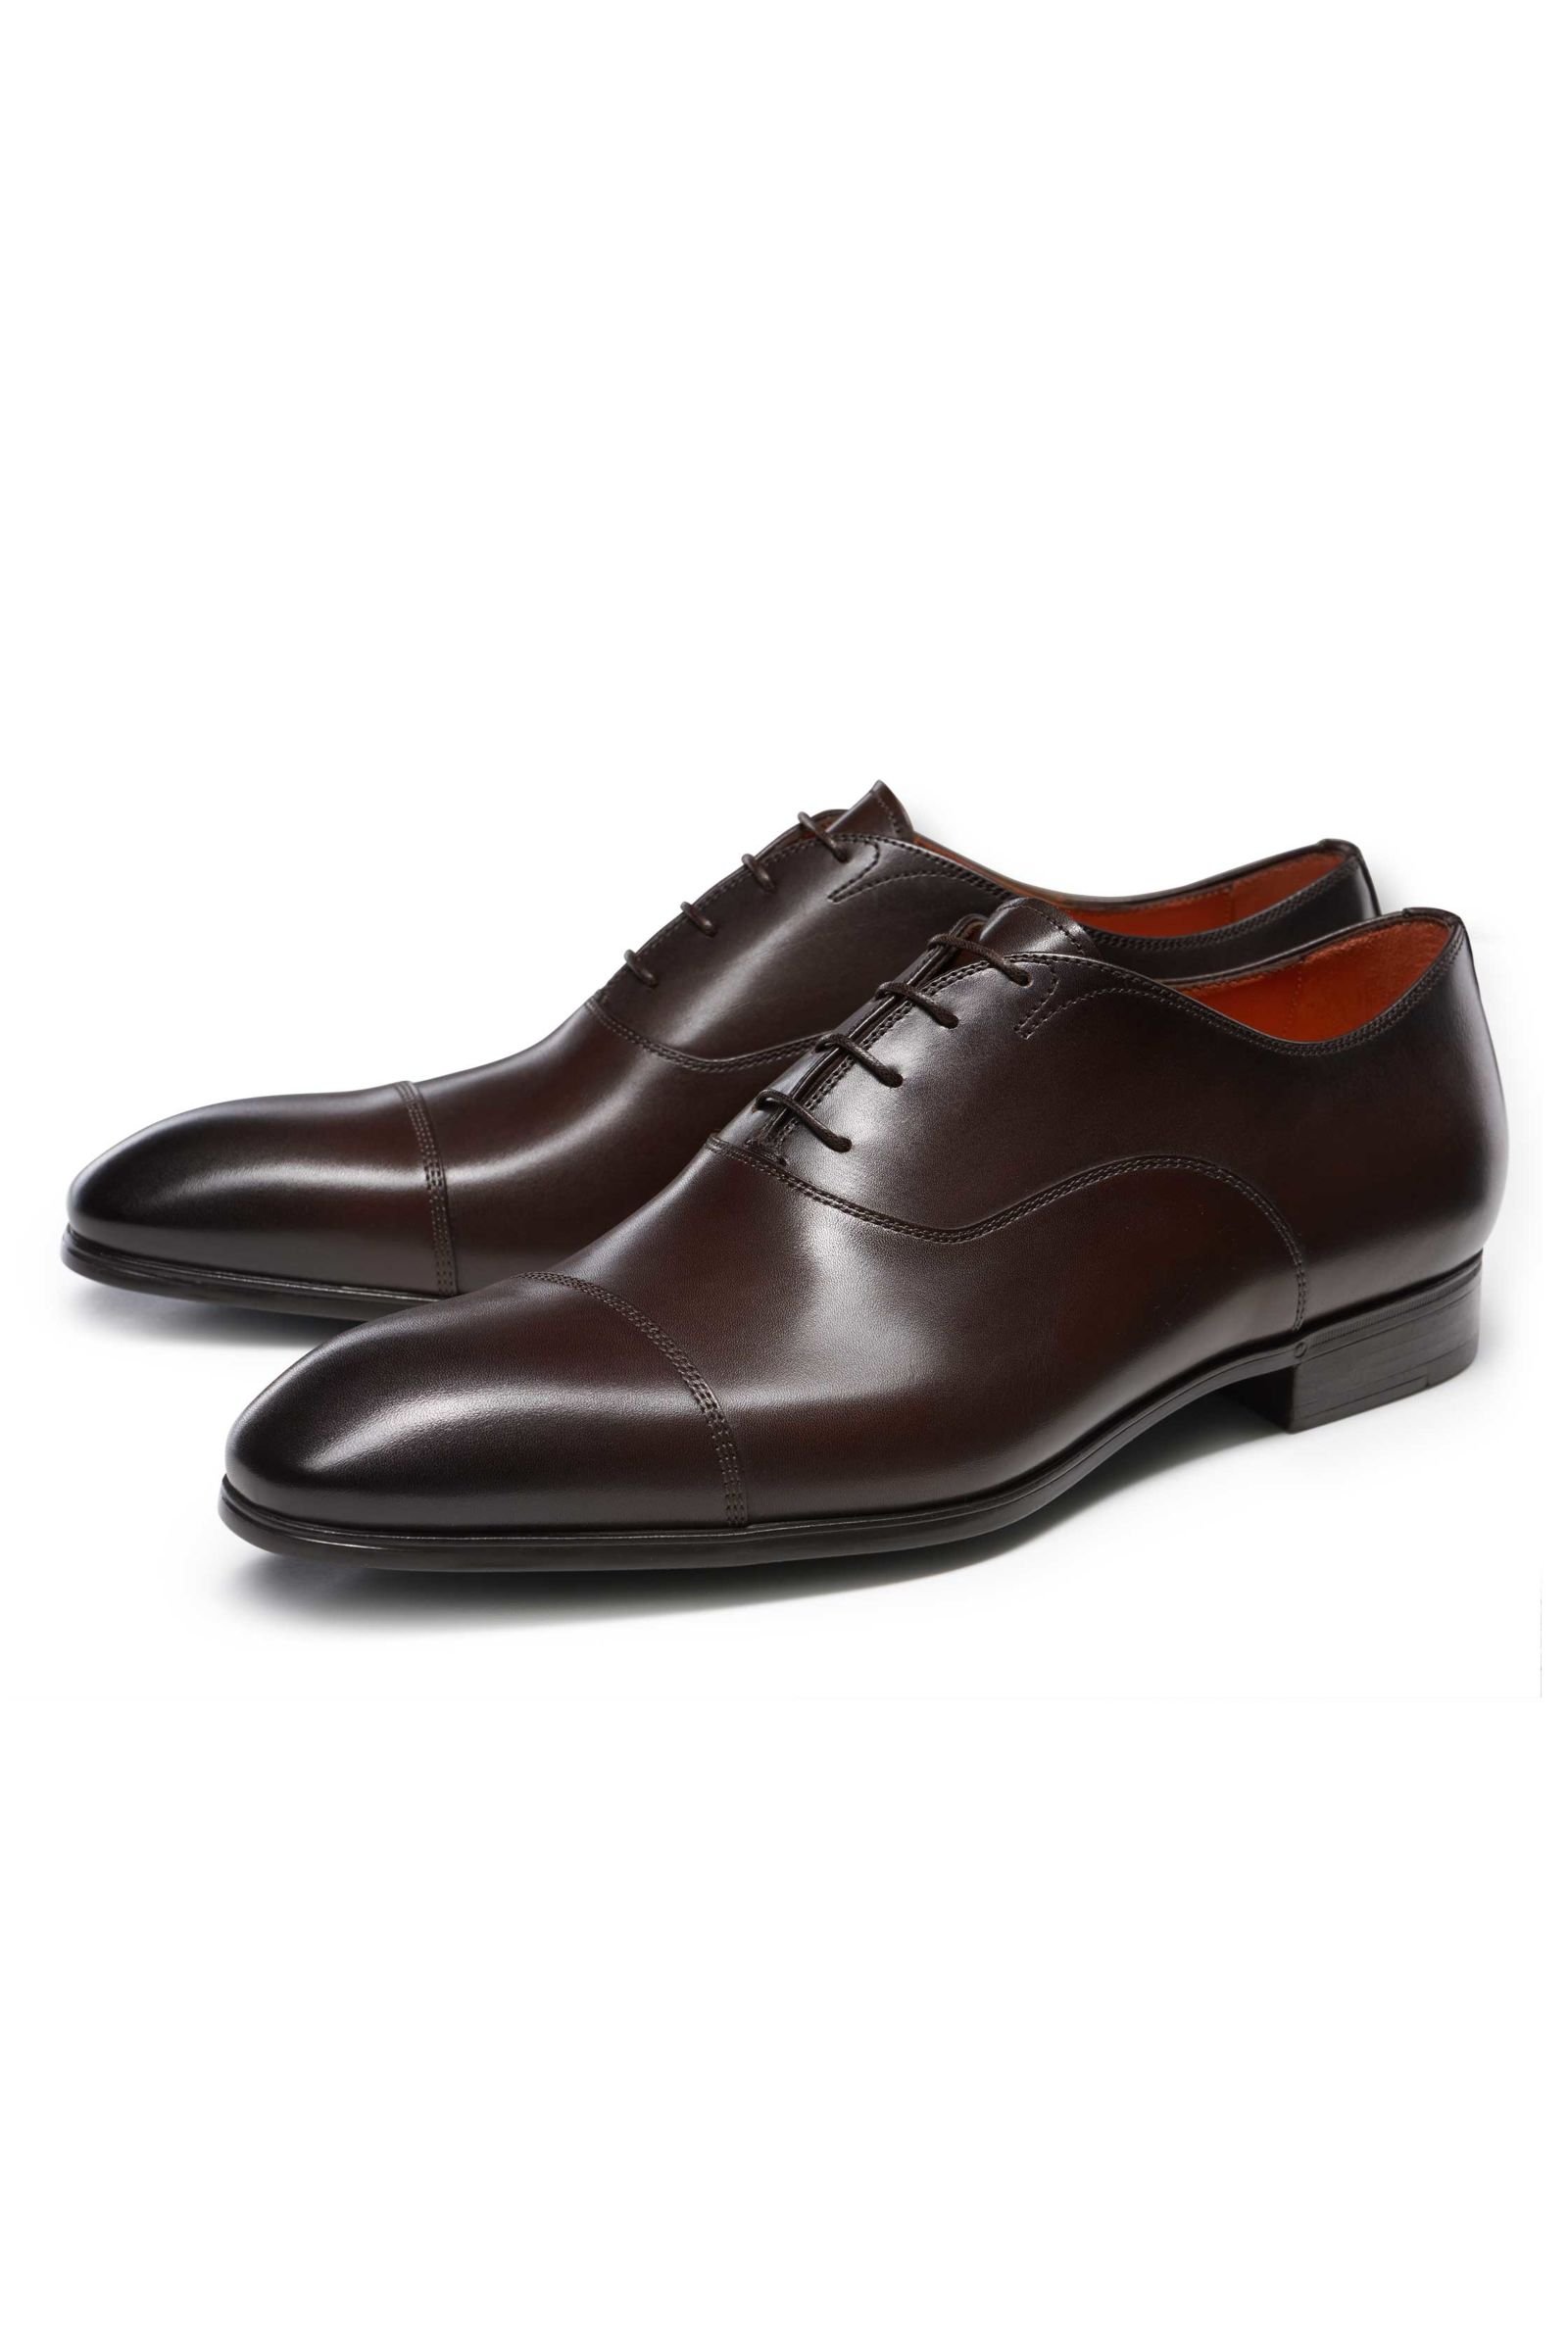 Oxford shoes dark brown